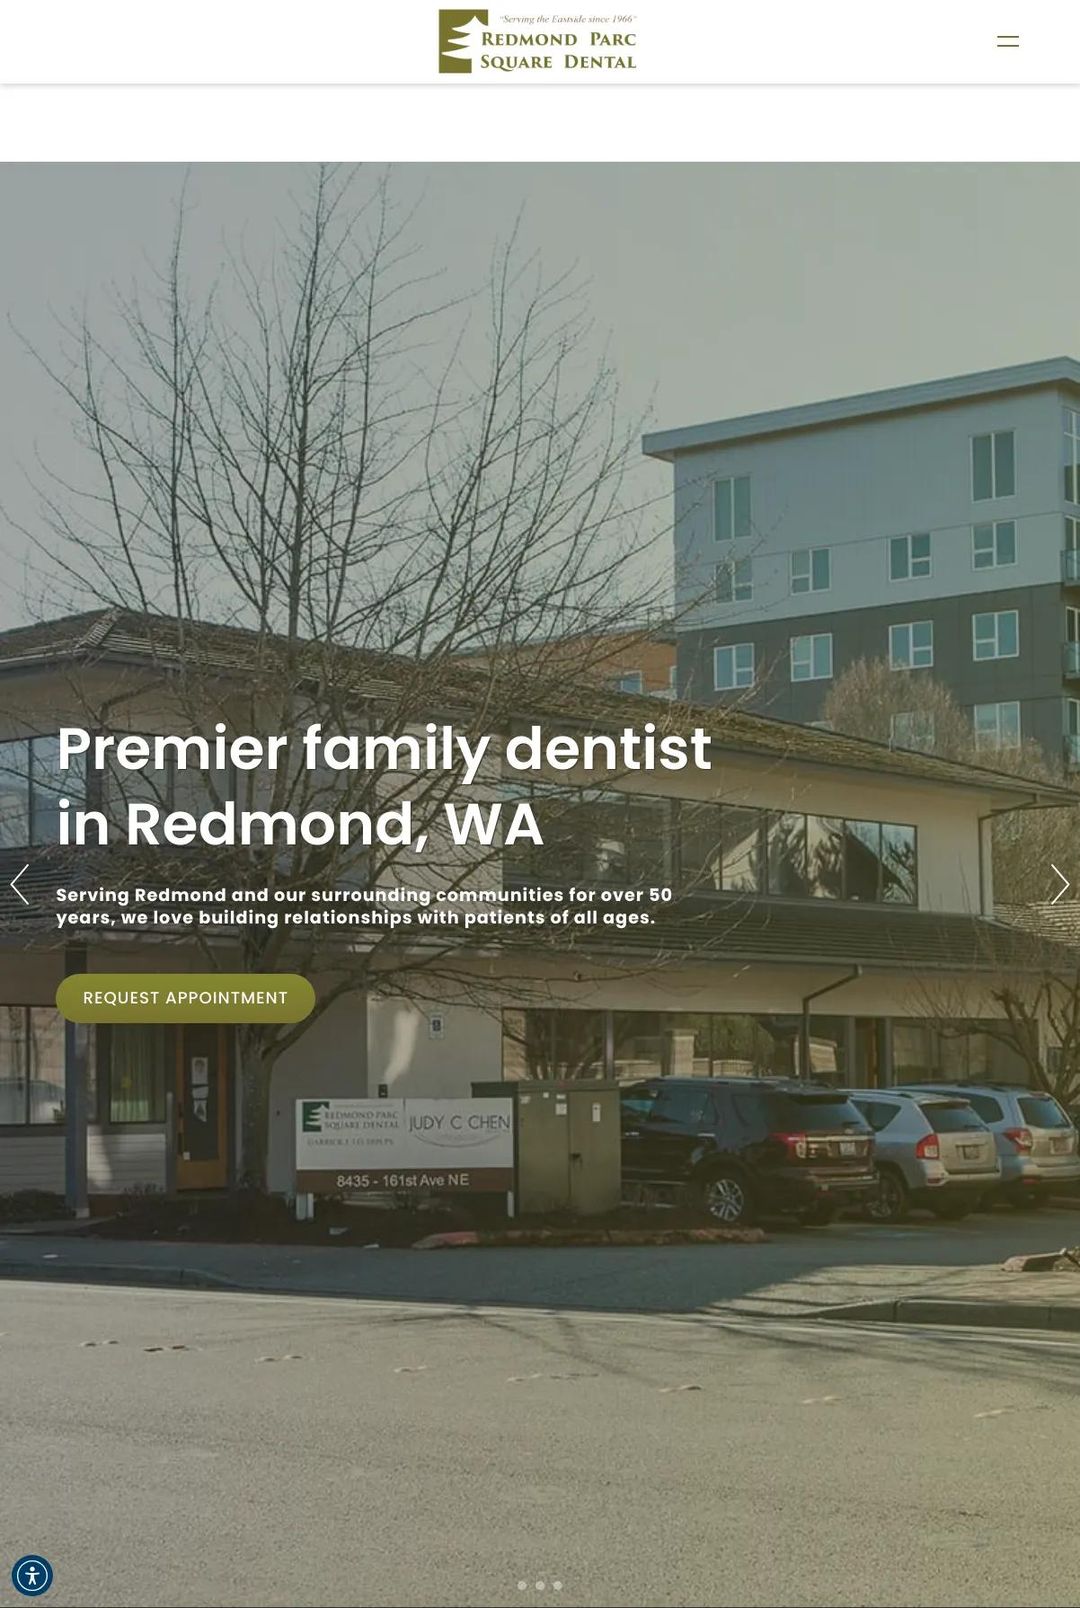 Screenshot 1 of Redmond Parc Square Dental (Example Squarespace Dentist Website)